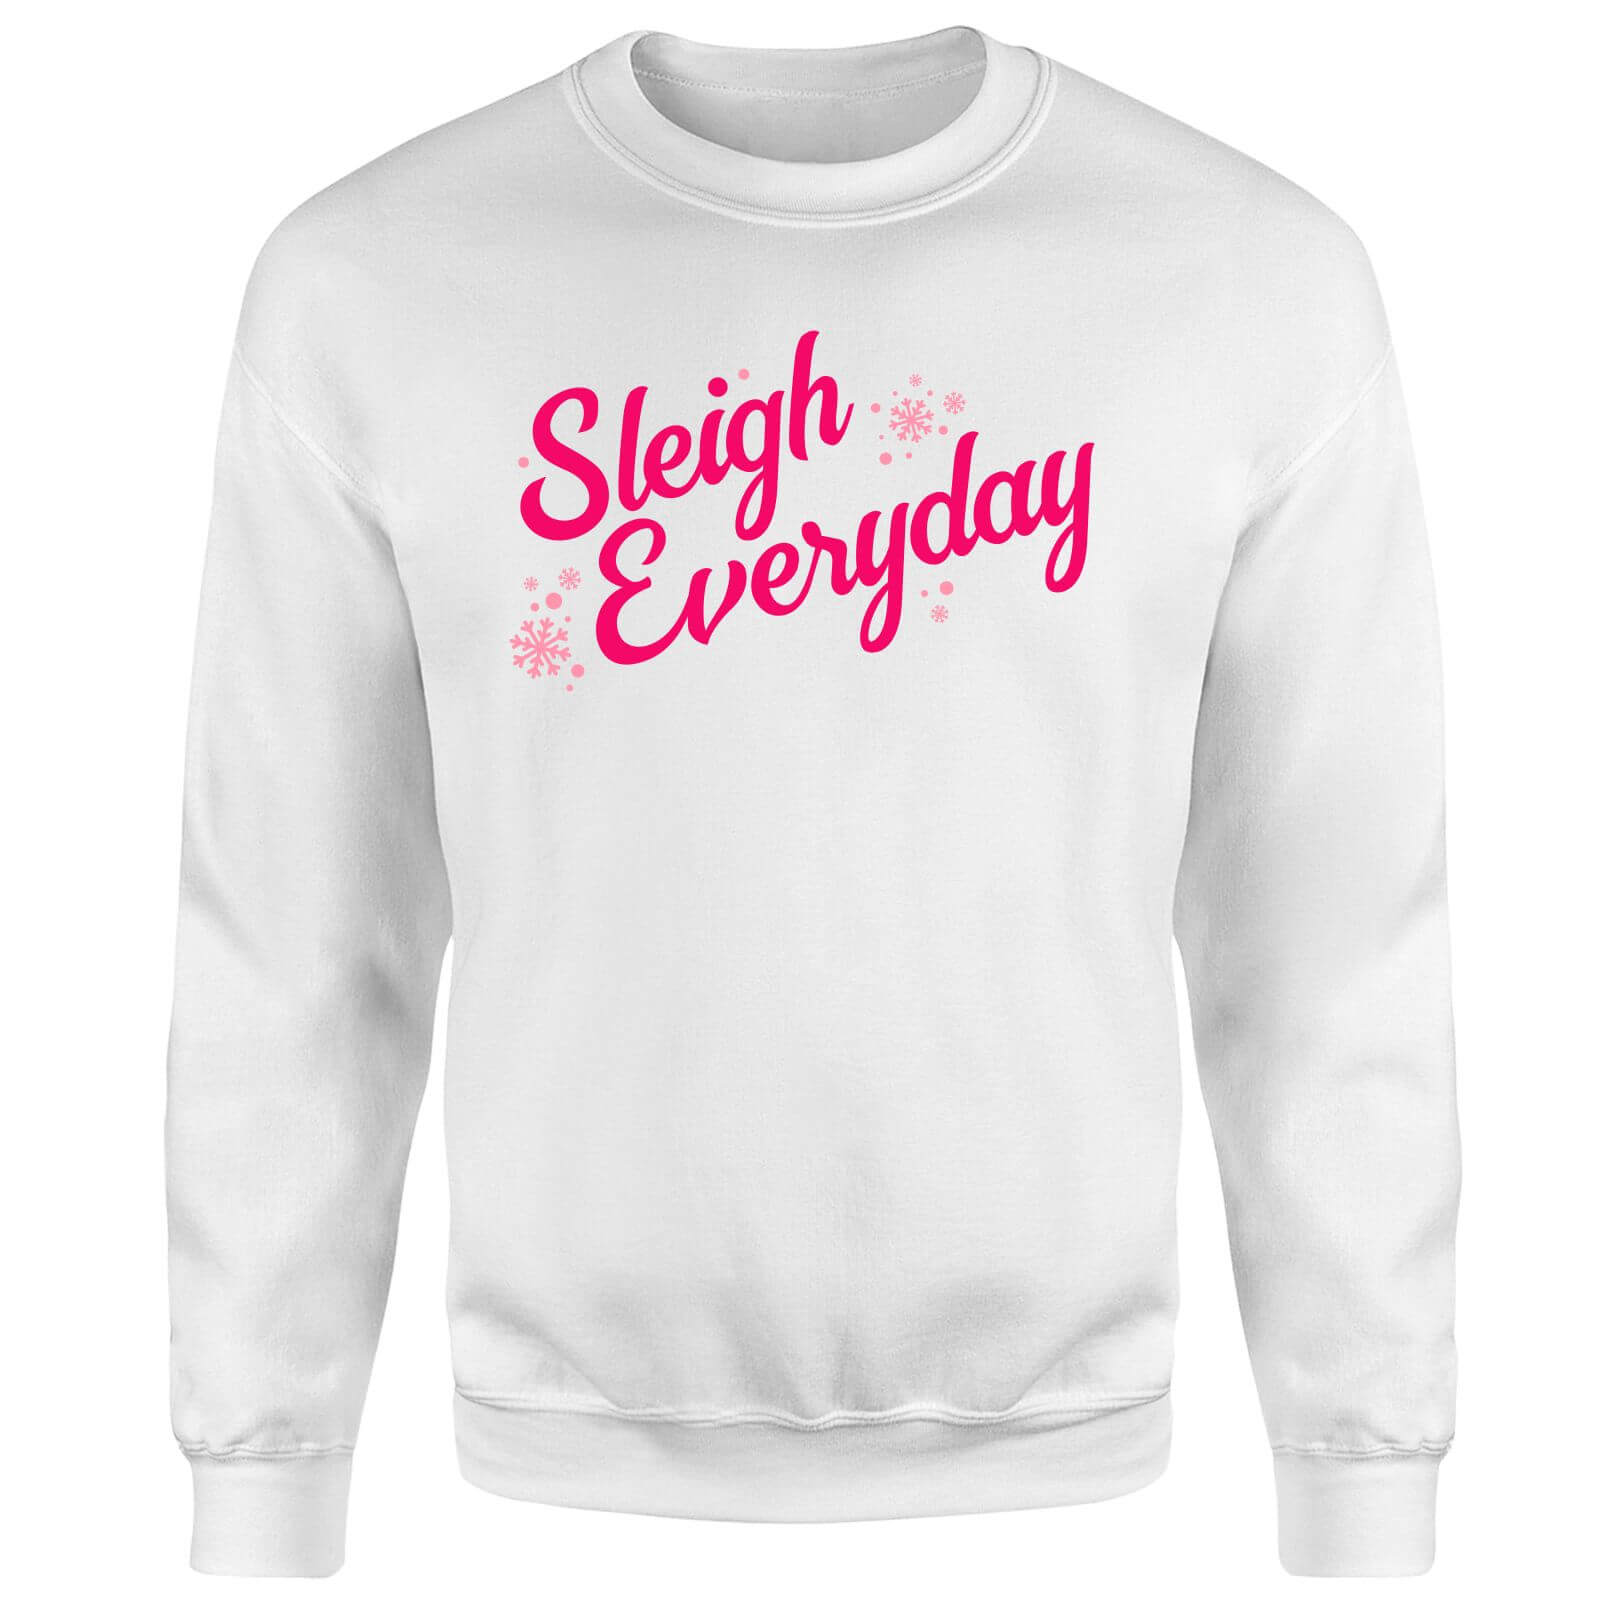 Snowy Sleigh Everyday Unisex Sweatshirt - White - S - White